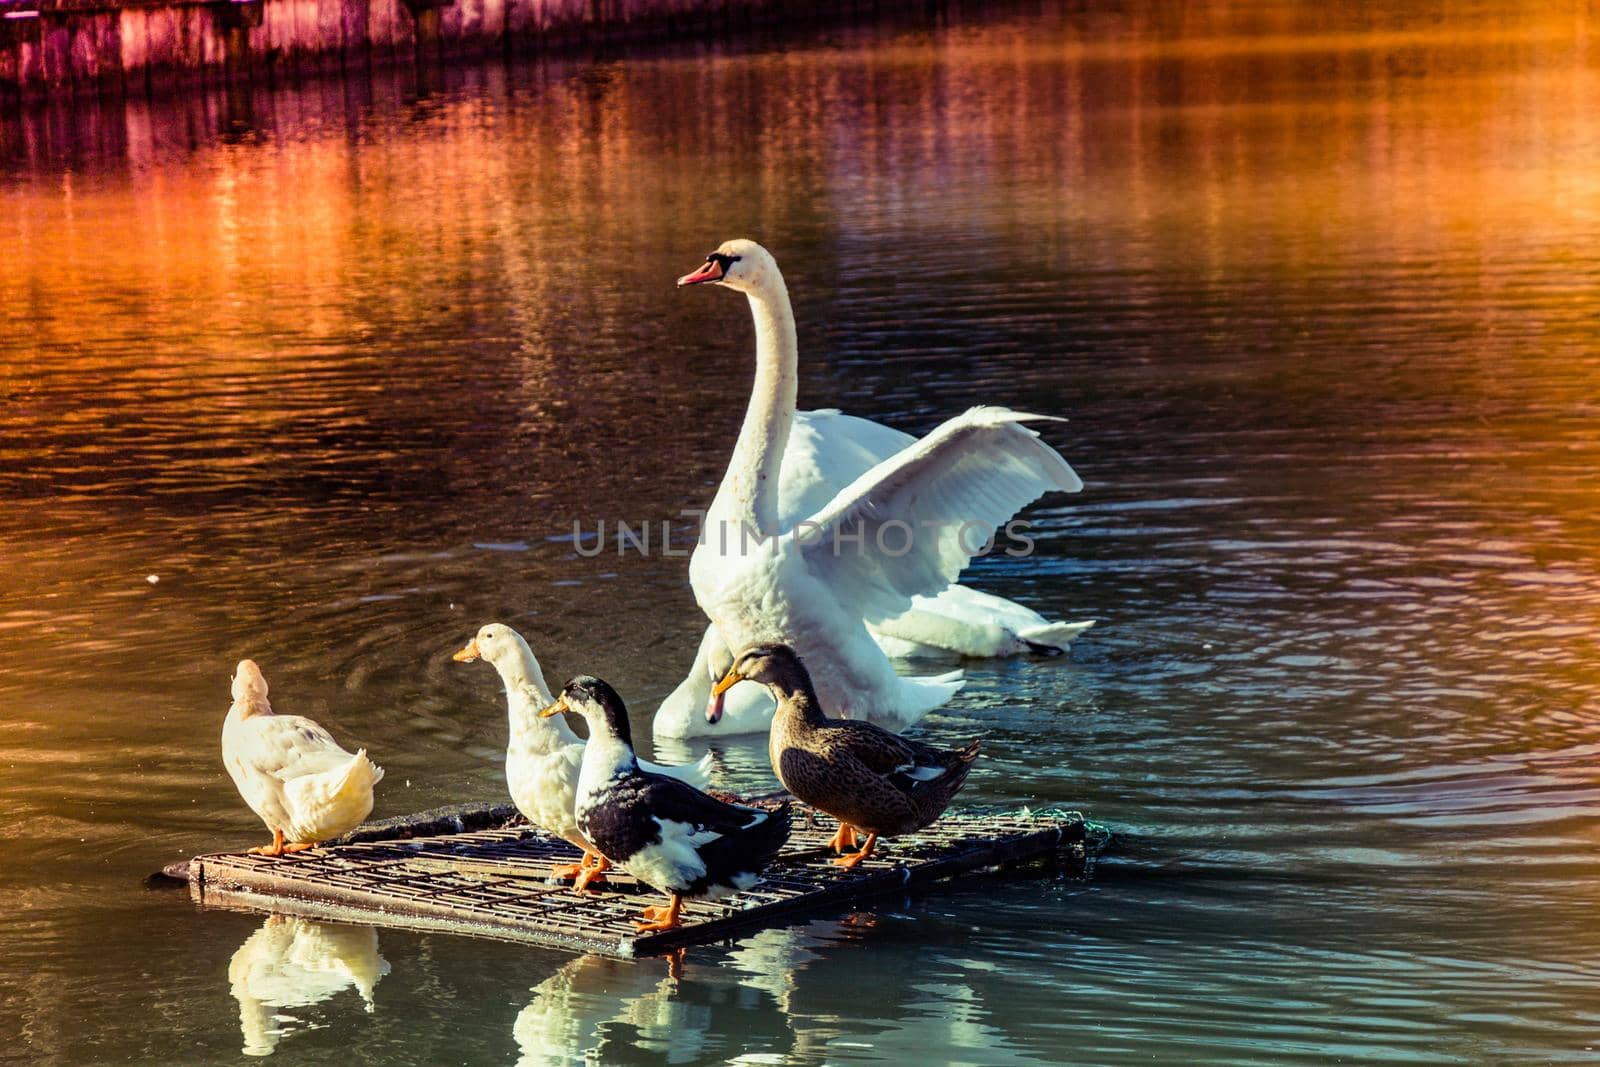 White swan swimming in the lake near ducks on board